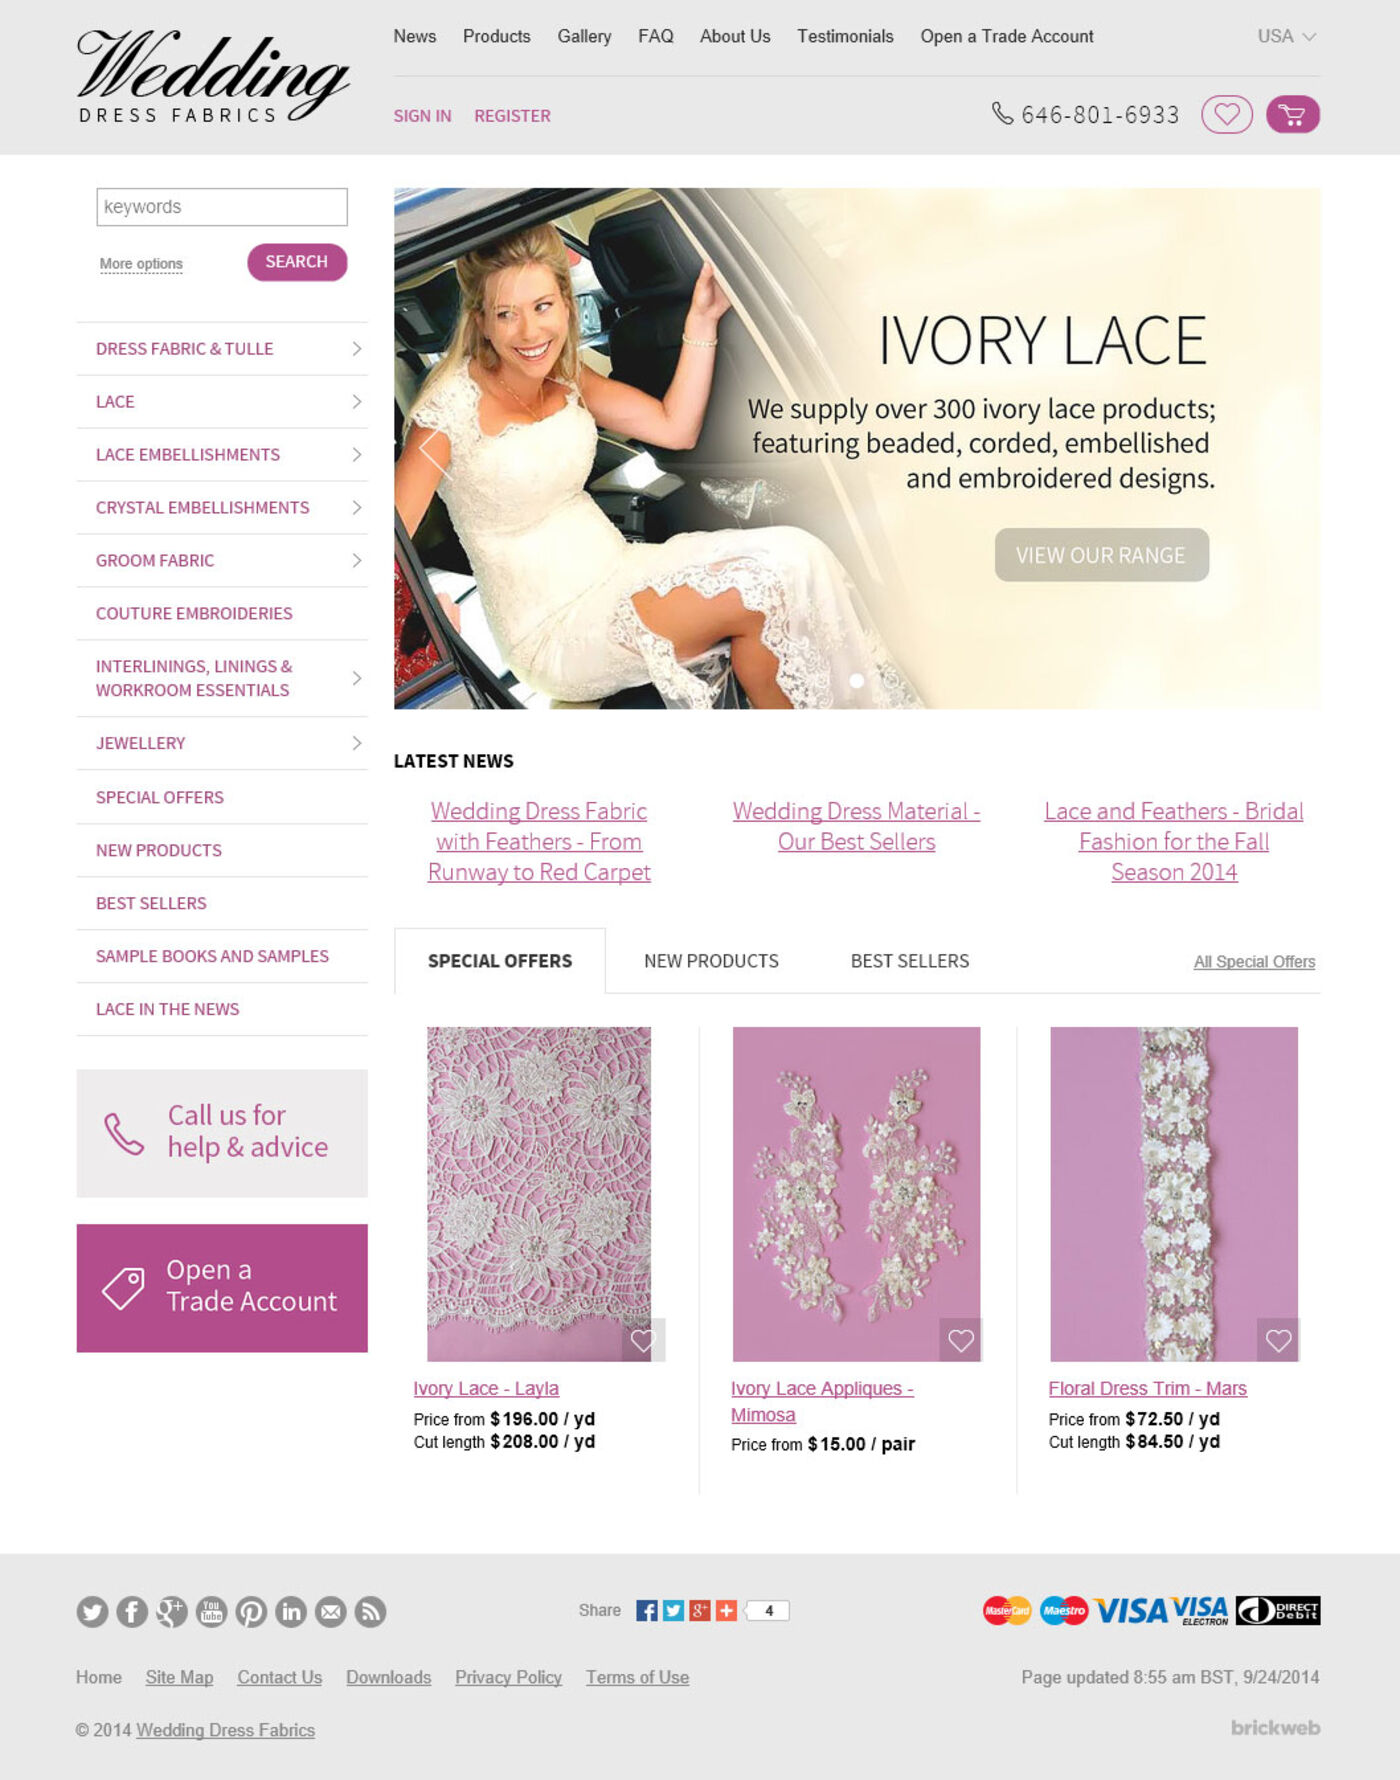 Wedding Dress Fabrics Home page